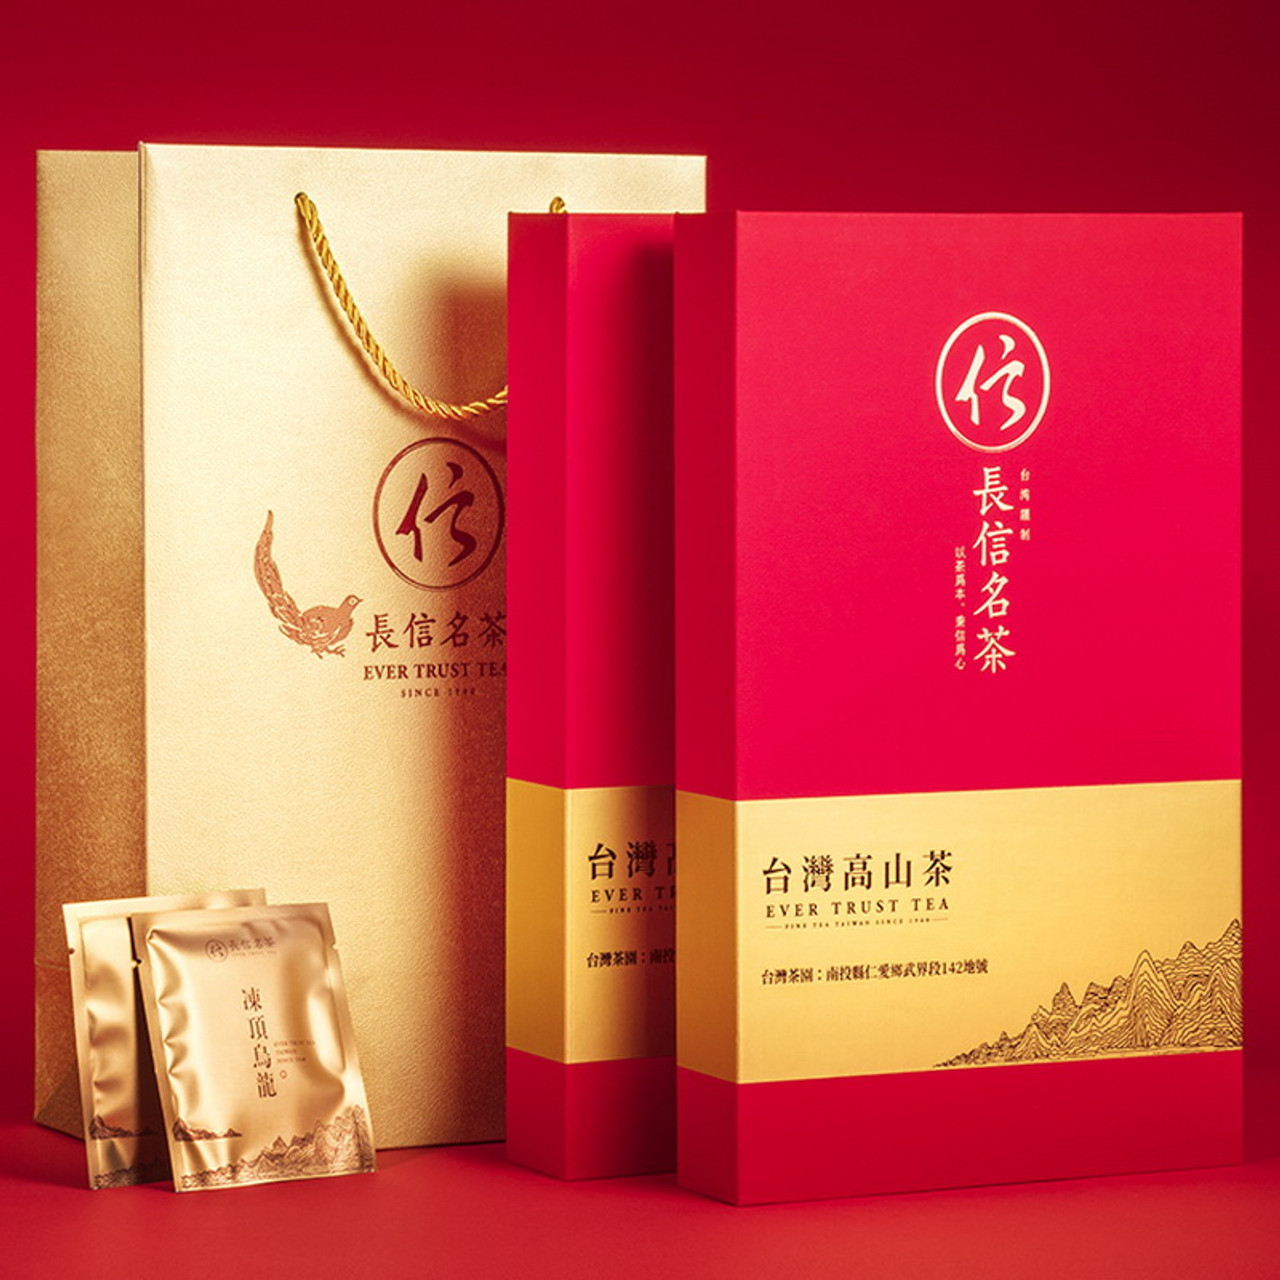 EVER TRUST TEA Brand AliShan Taiwan High Mountain Gao Shan Oolong Tea 108g*2